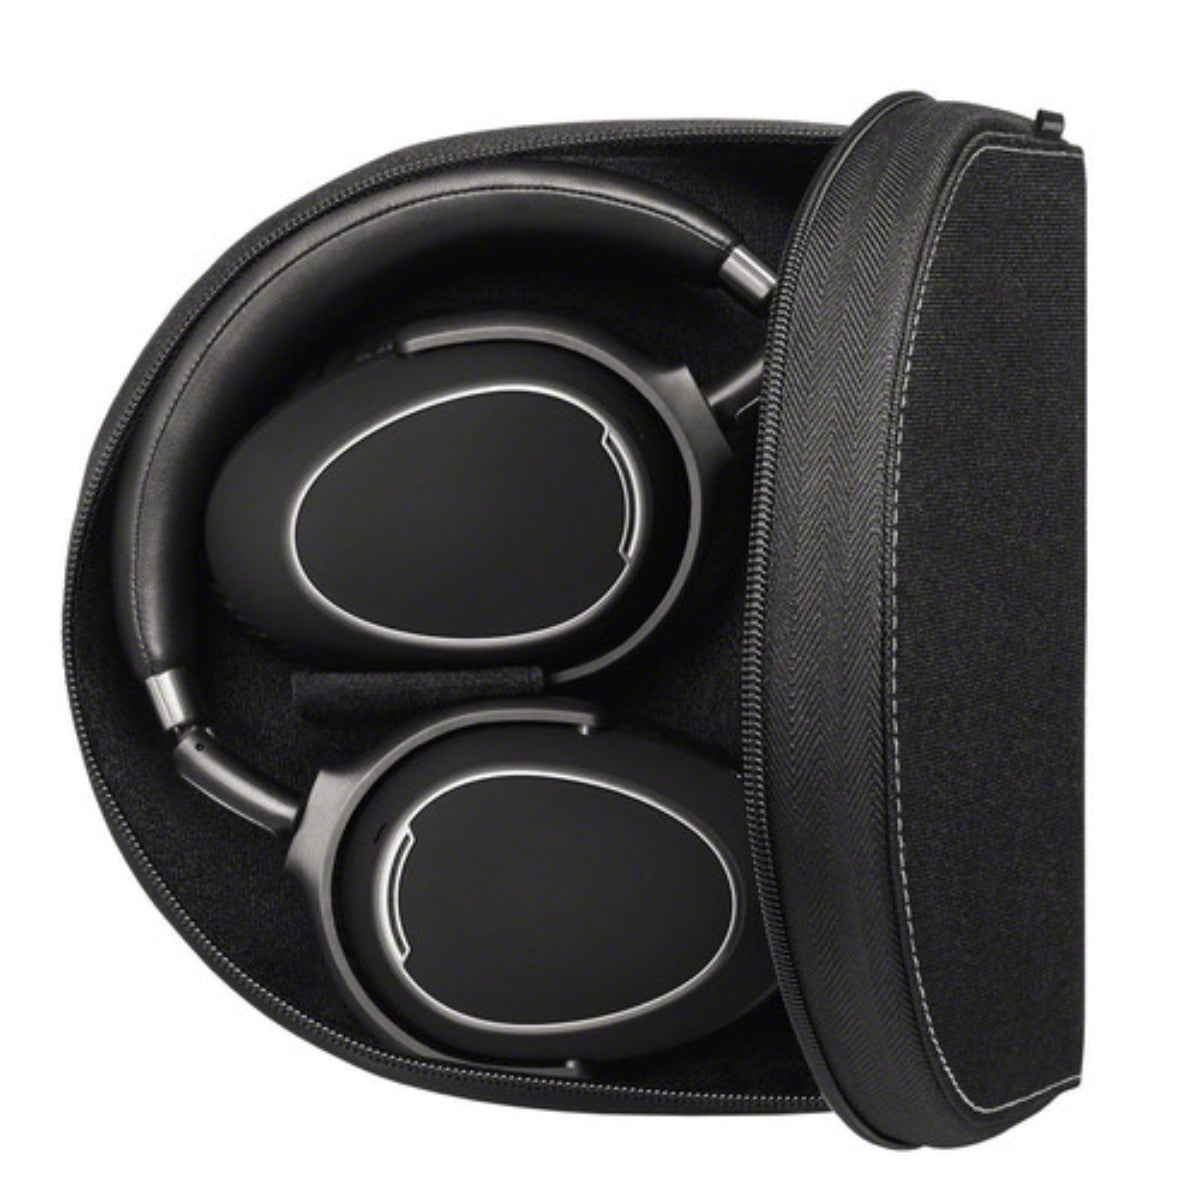 Sennheiser PXC 480 Stereo Noise Cancelling Headset, Circumaural, Foldable, USB Cable